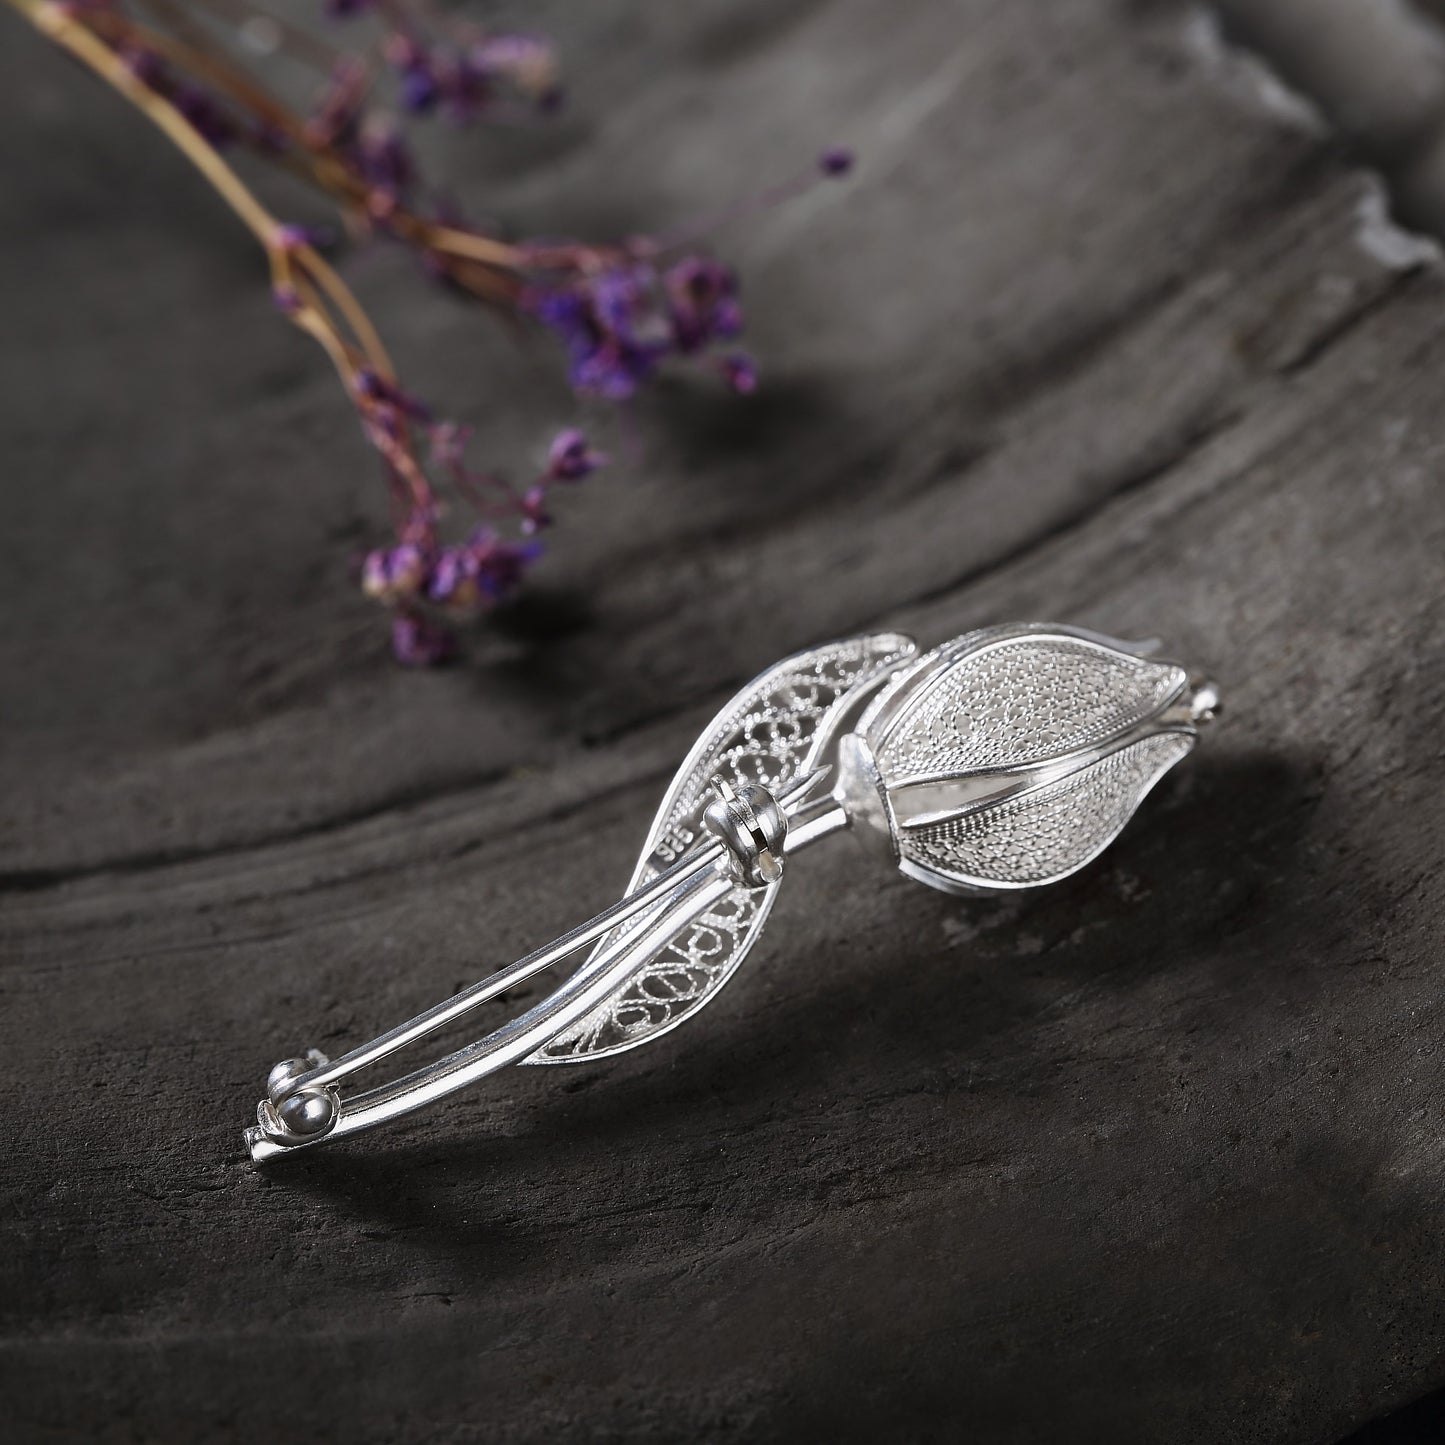 Vintage Handmade Flower Silver Brooch